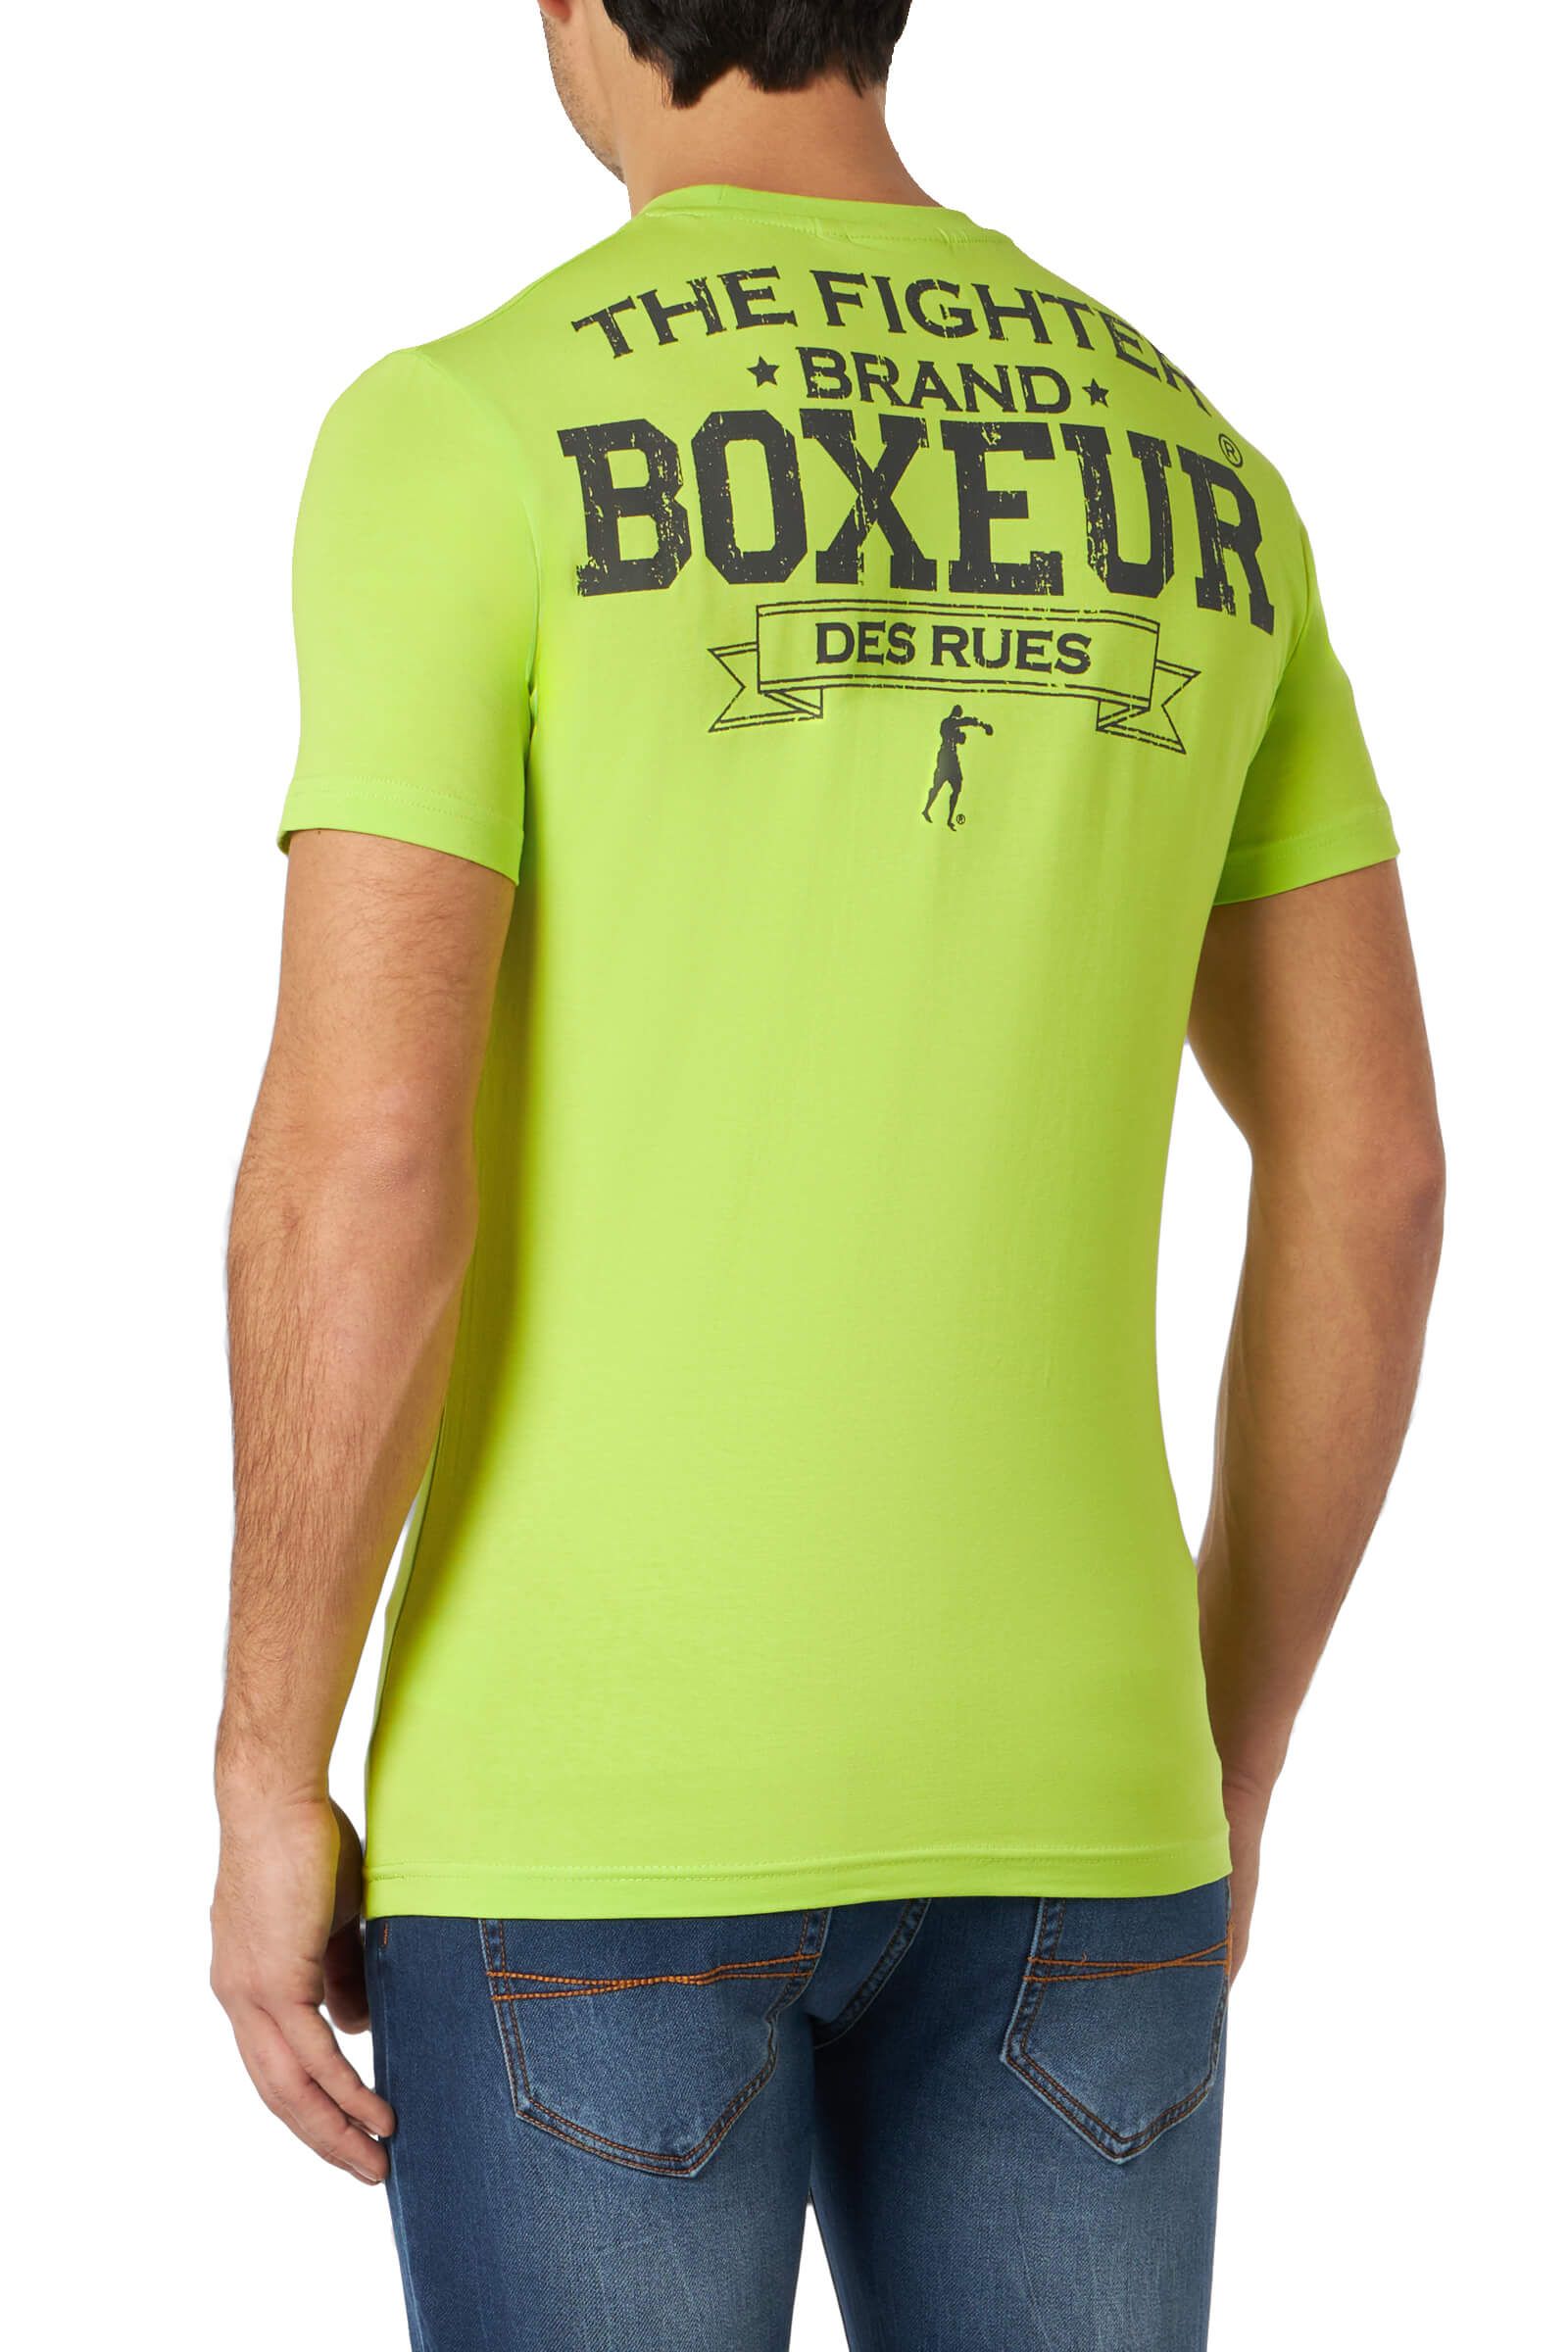 Boxeur T-SHIRT BOXEUR STREET 2, moška majica, zelena | Intersport